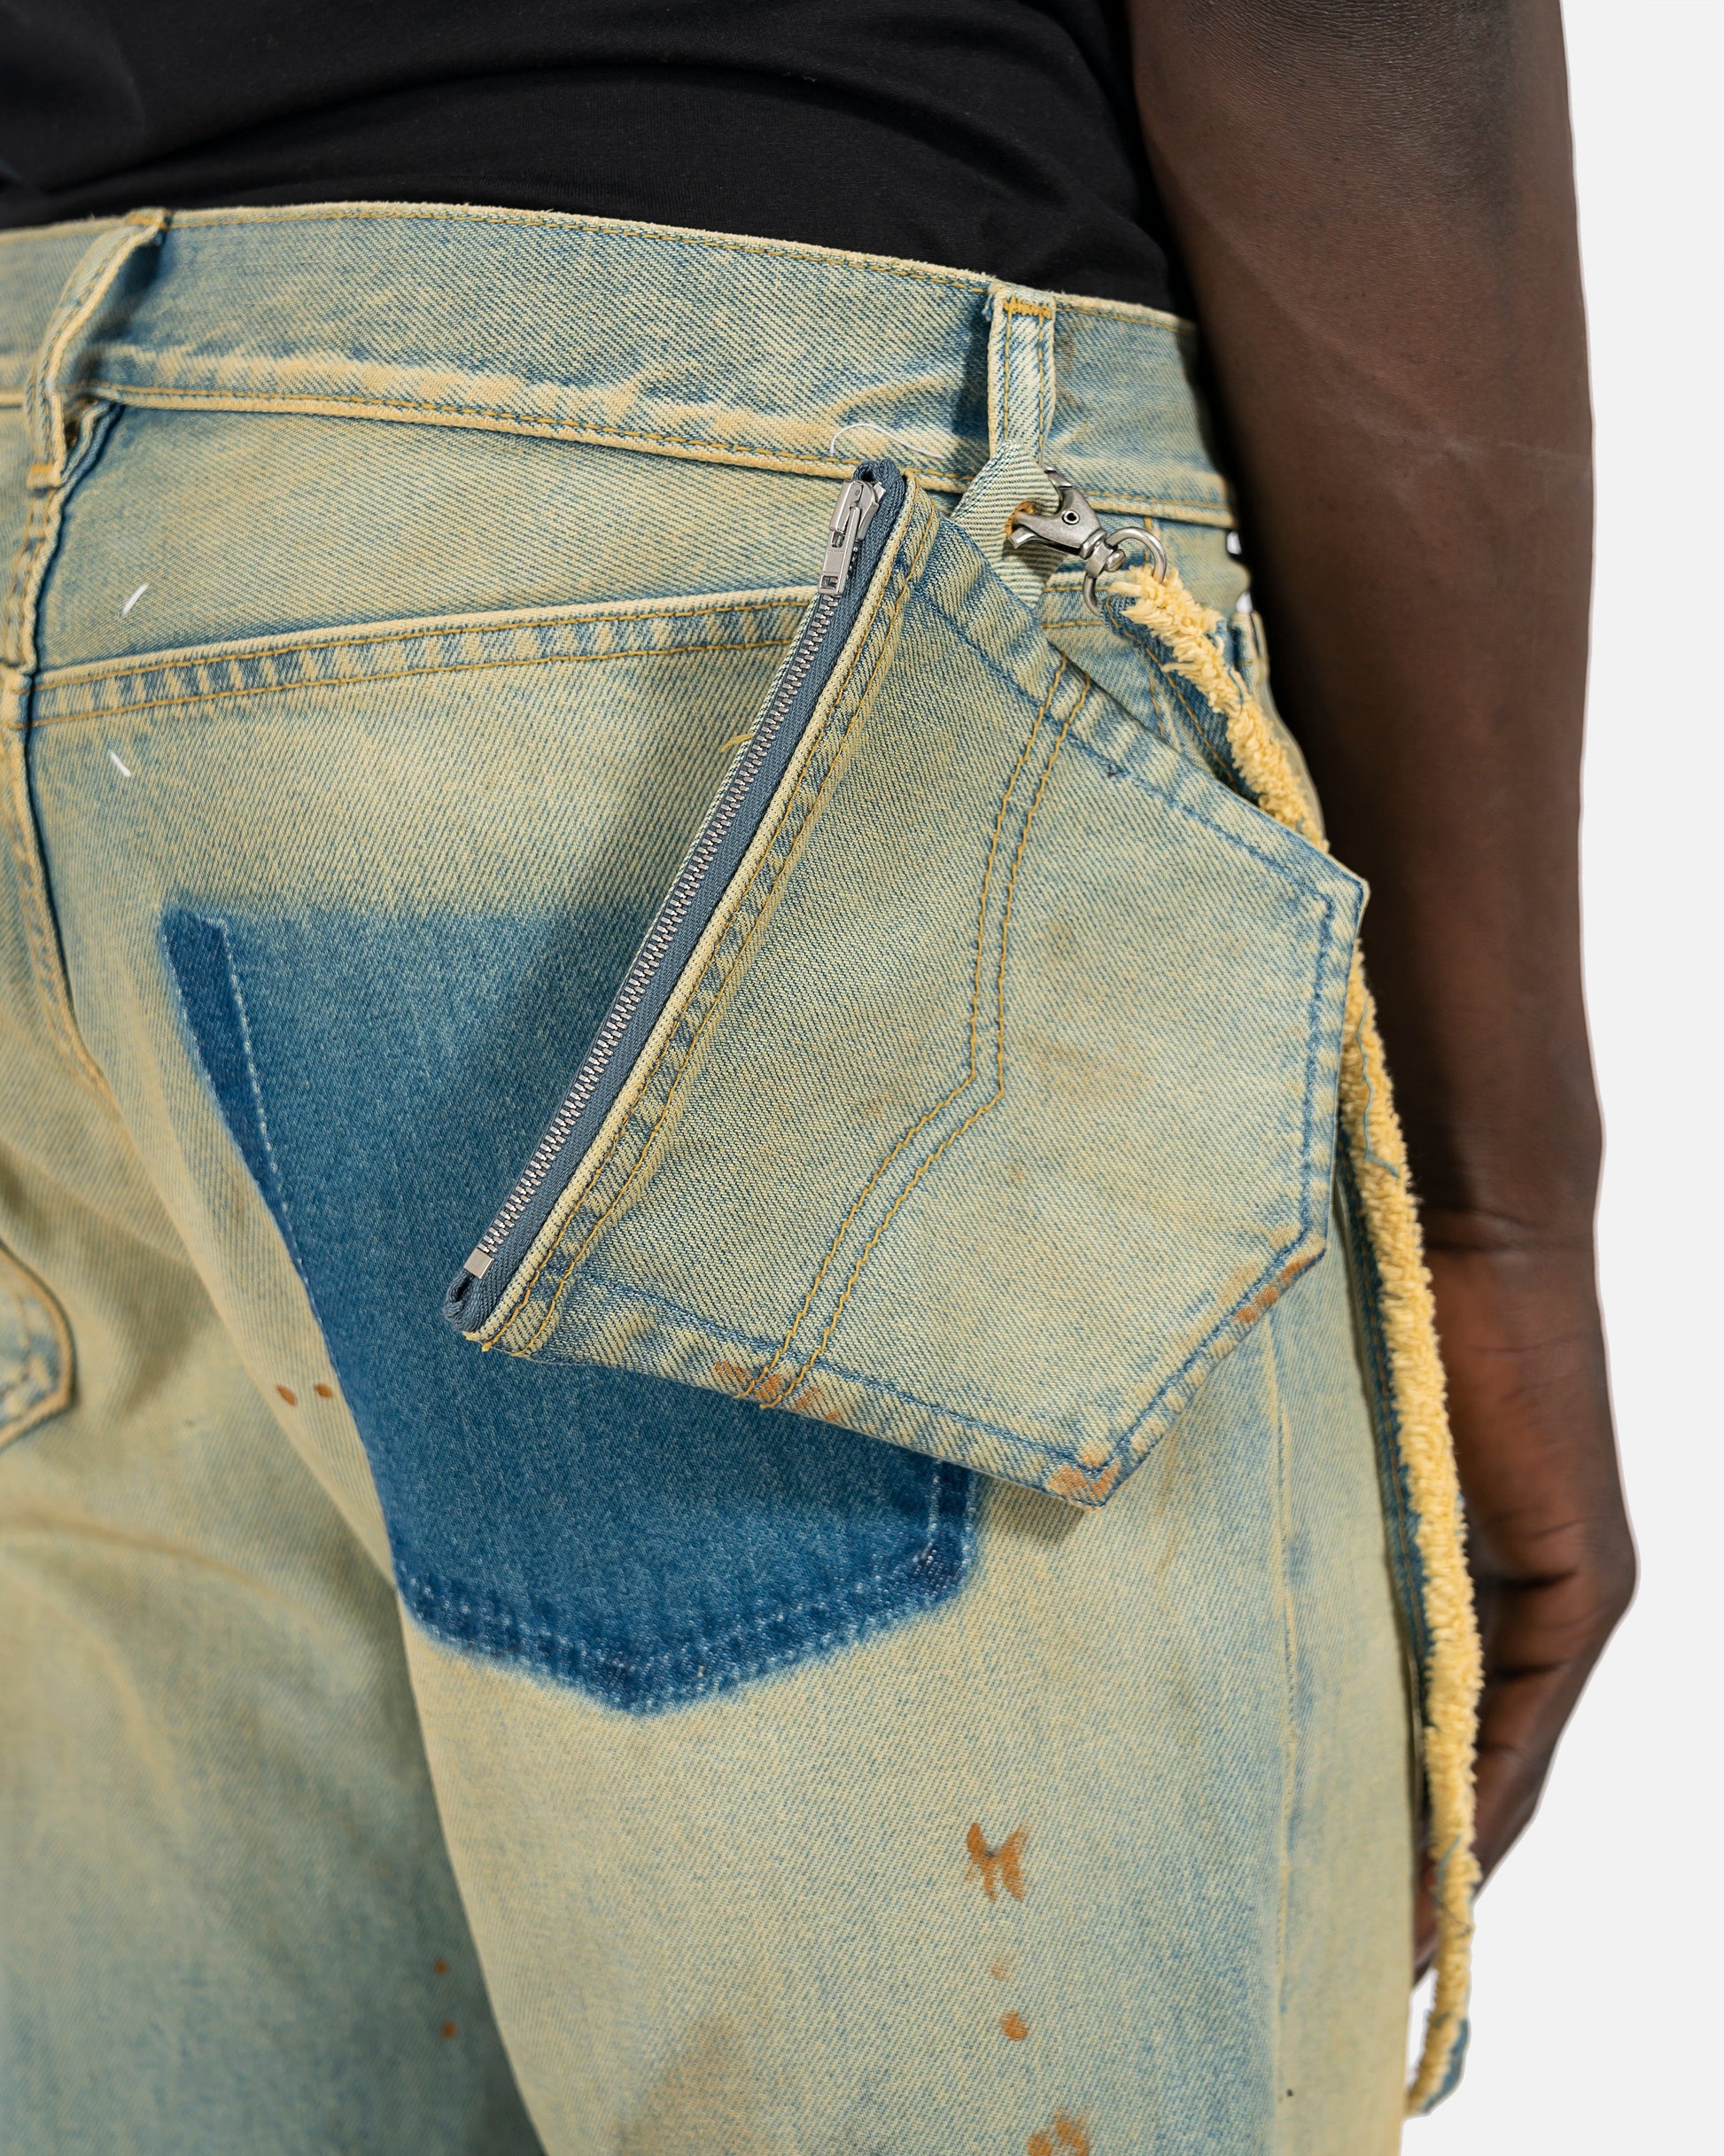 Maison Margiela Men's Jeans 5 Pockets Pants in Dirty Wash